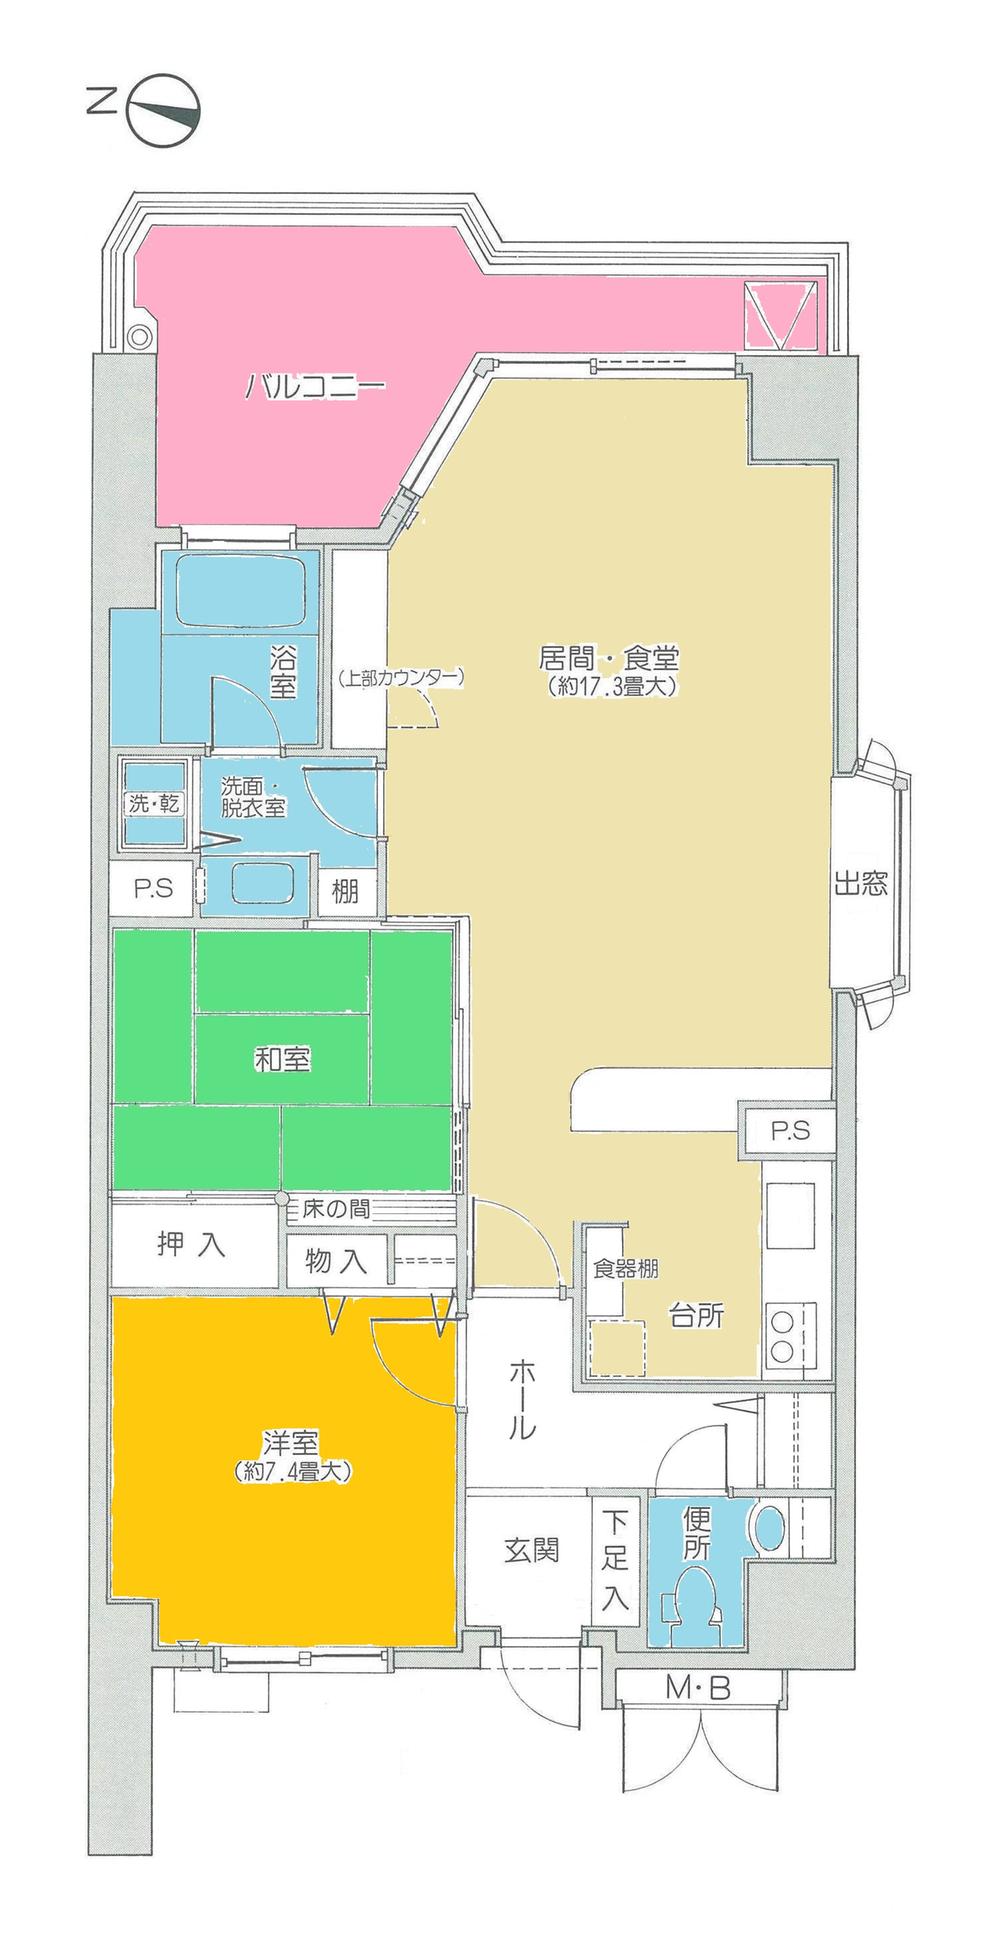 Floor plan. 2LDK, Price 7.8 million yen, Footprint 81.7 sq m , Balcony area 14.06 sq m